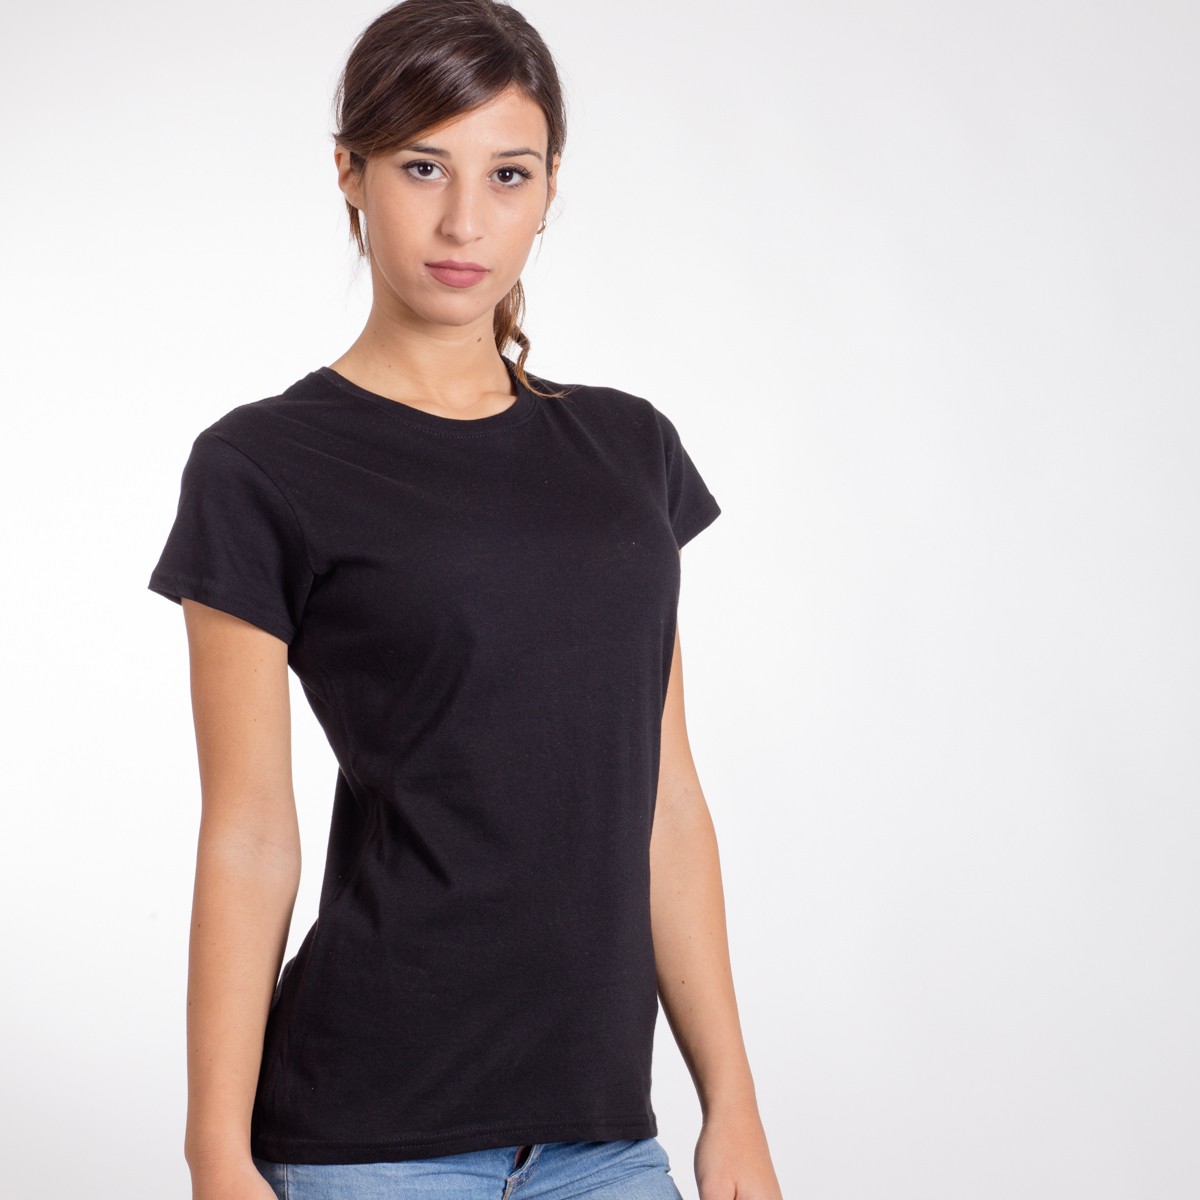 T-Shirt BS BSW150V Donna EVOLUTION WOMEN 100% COTONE Manica corta